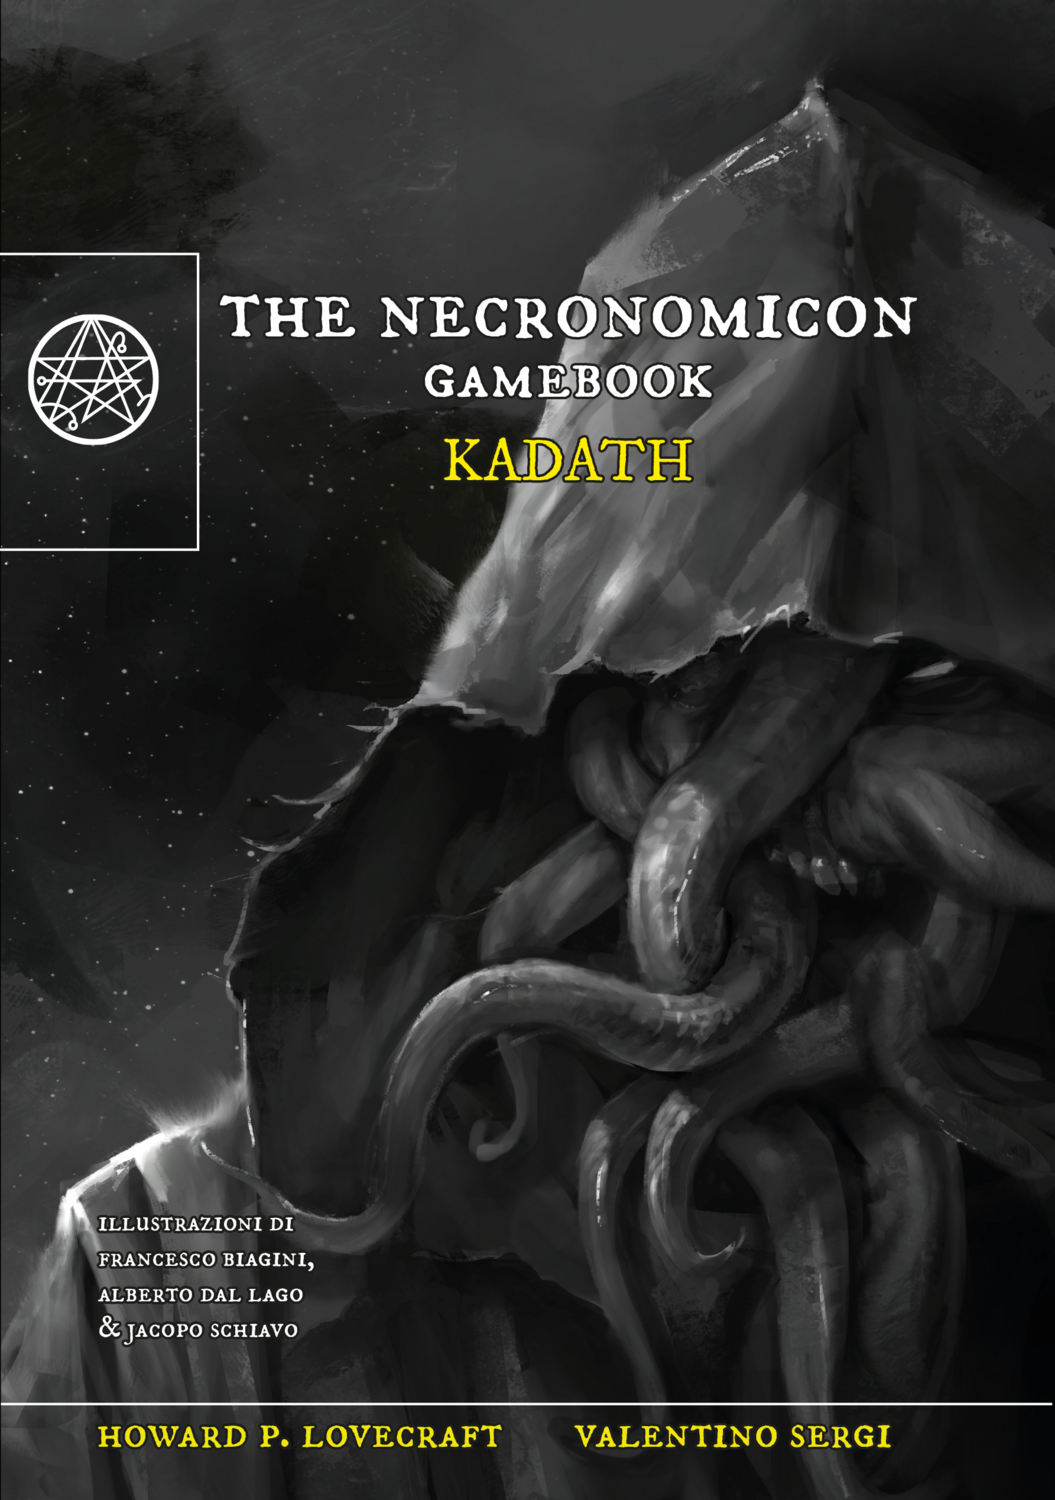 THE NECRONOMICON GAMEBOOK - KADATH